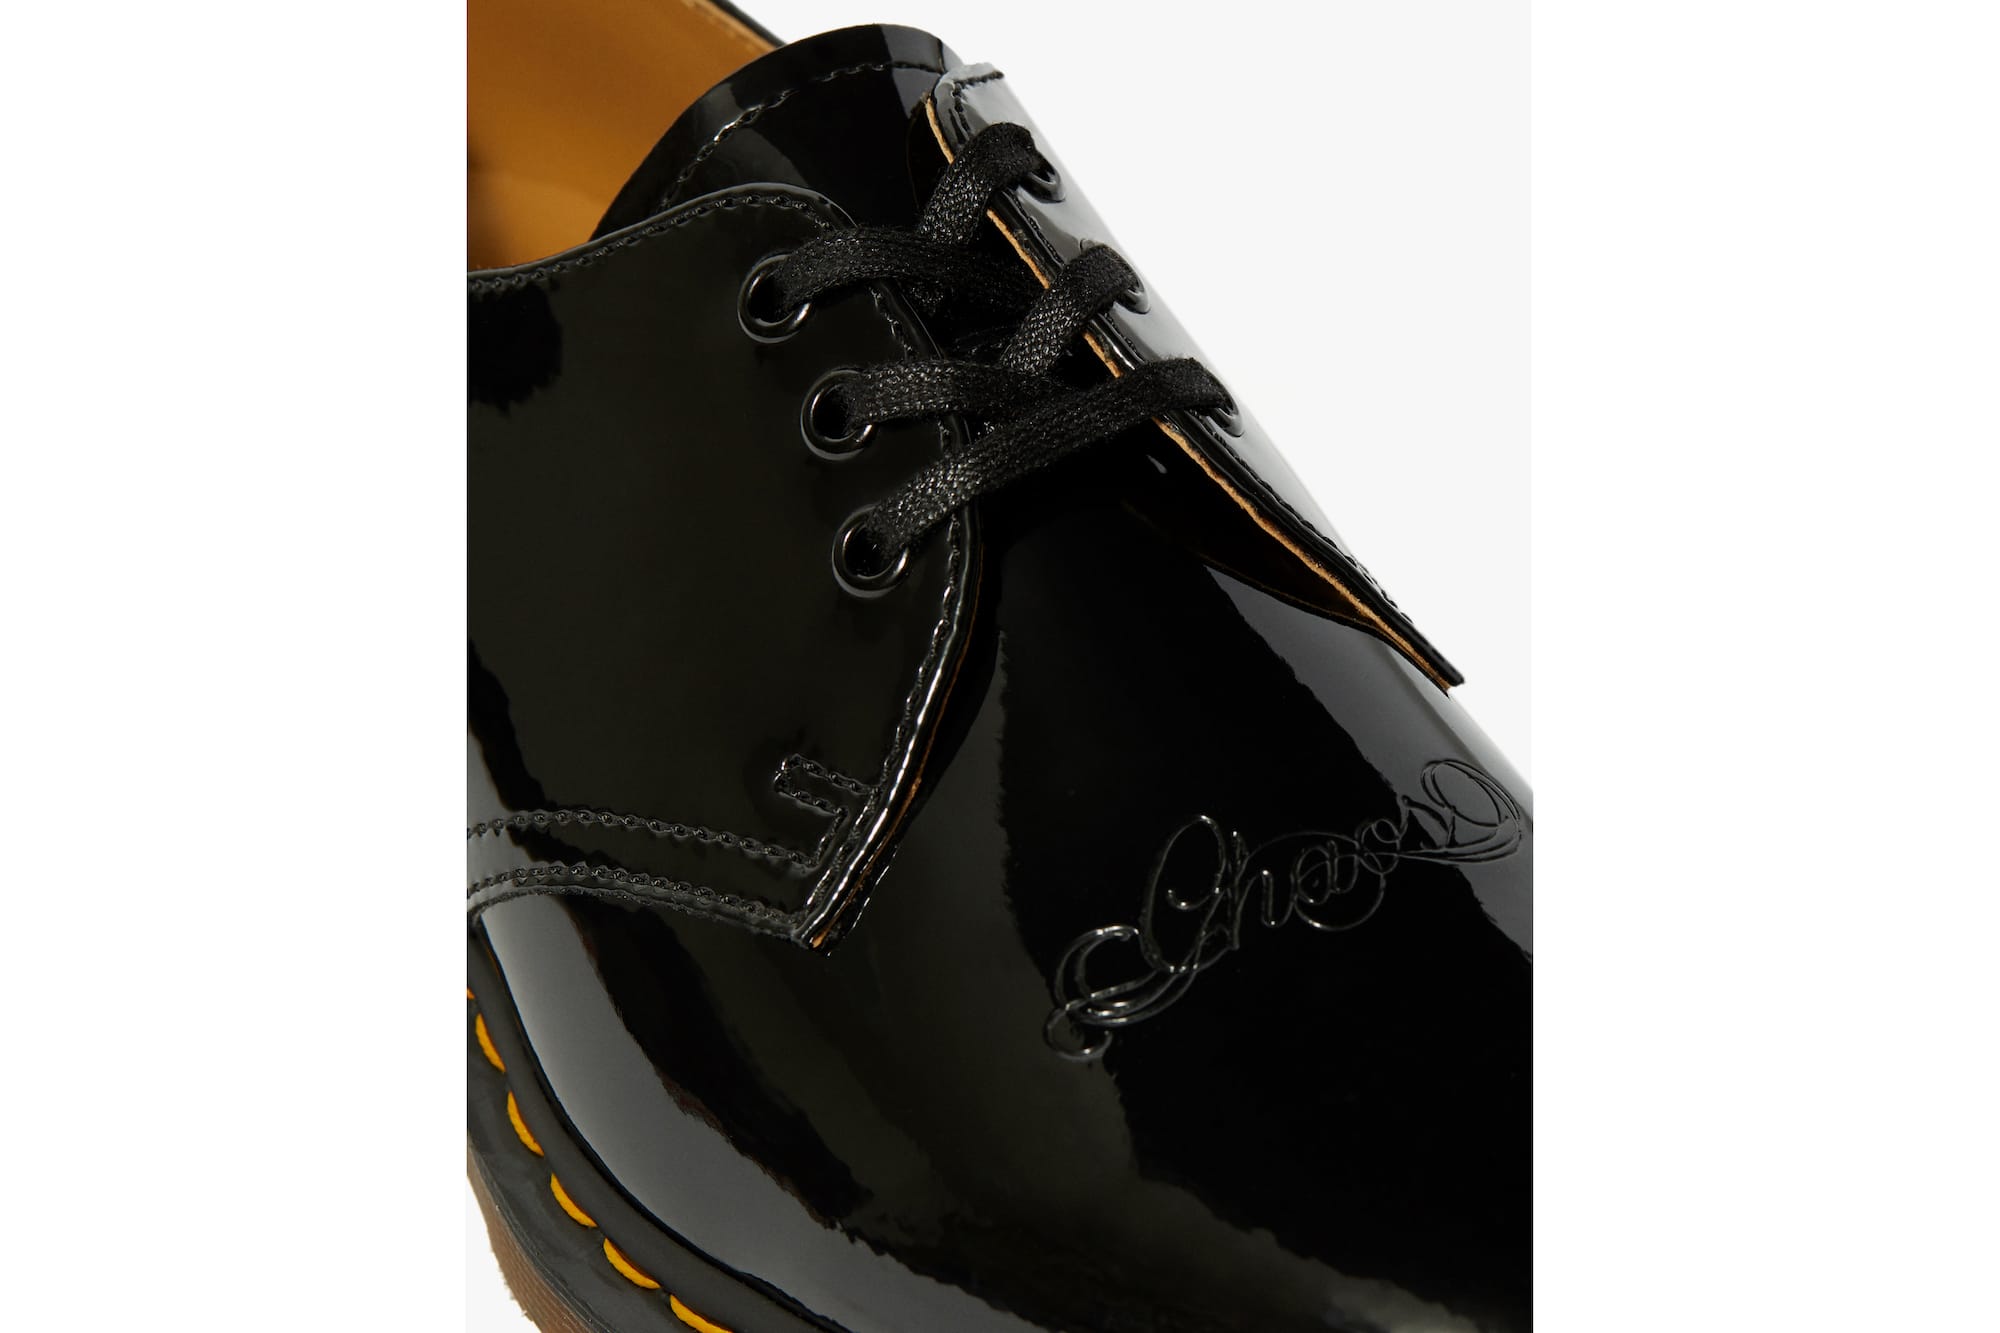 dr martens patent leather shoes